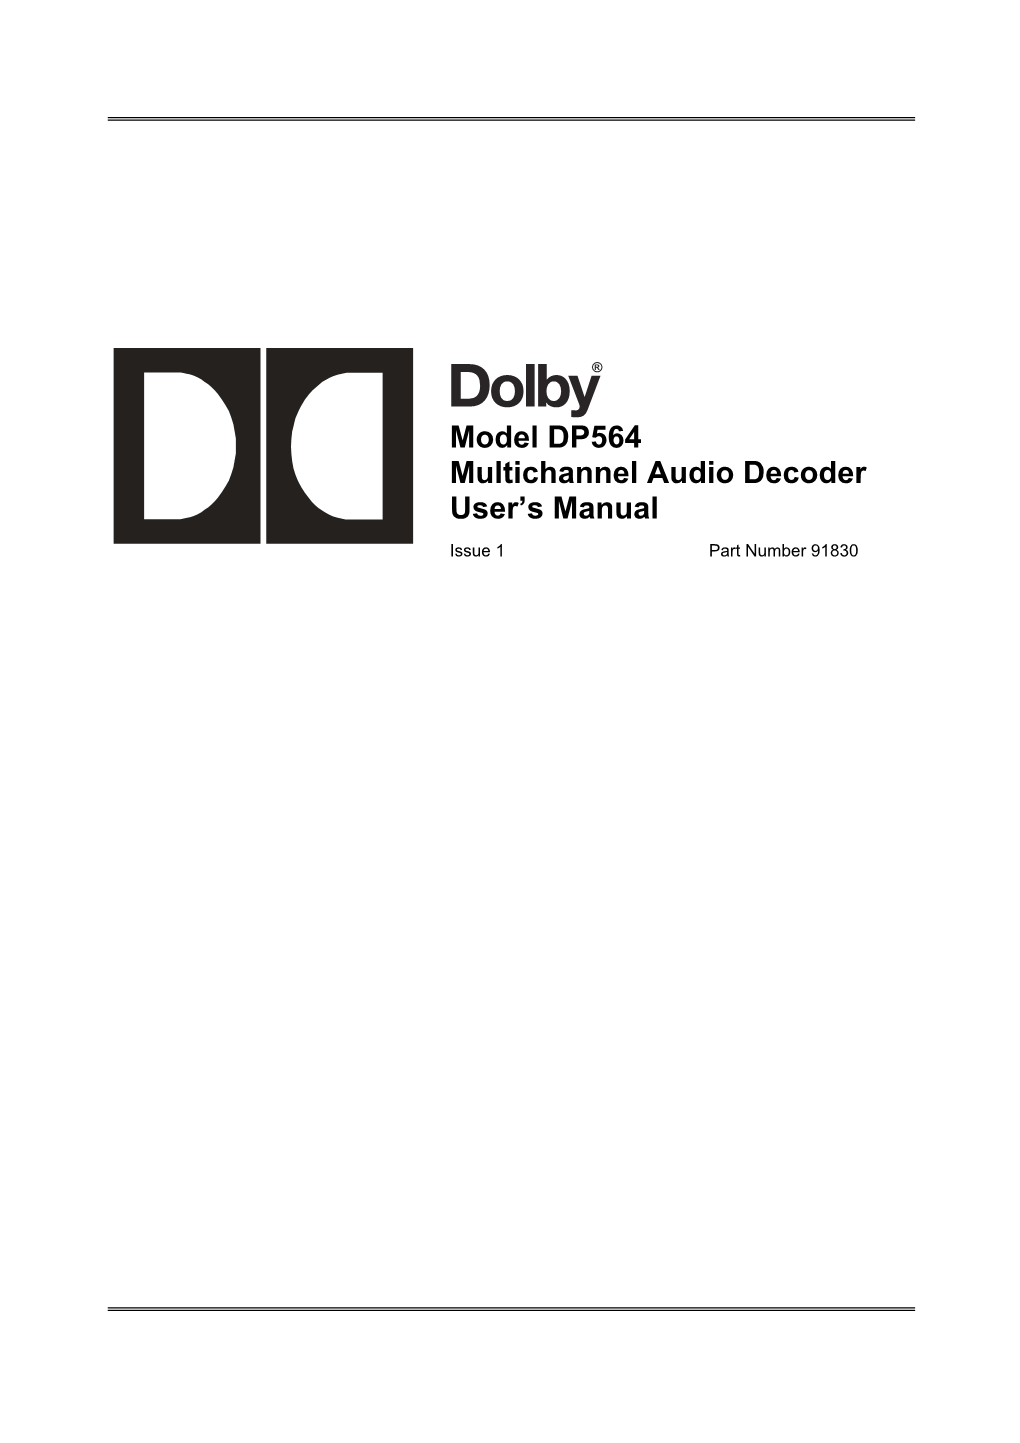 Model DP564 Multichannel Audio Decoder User's Manual